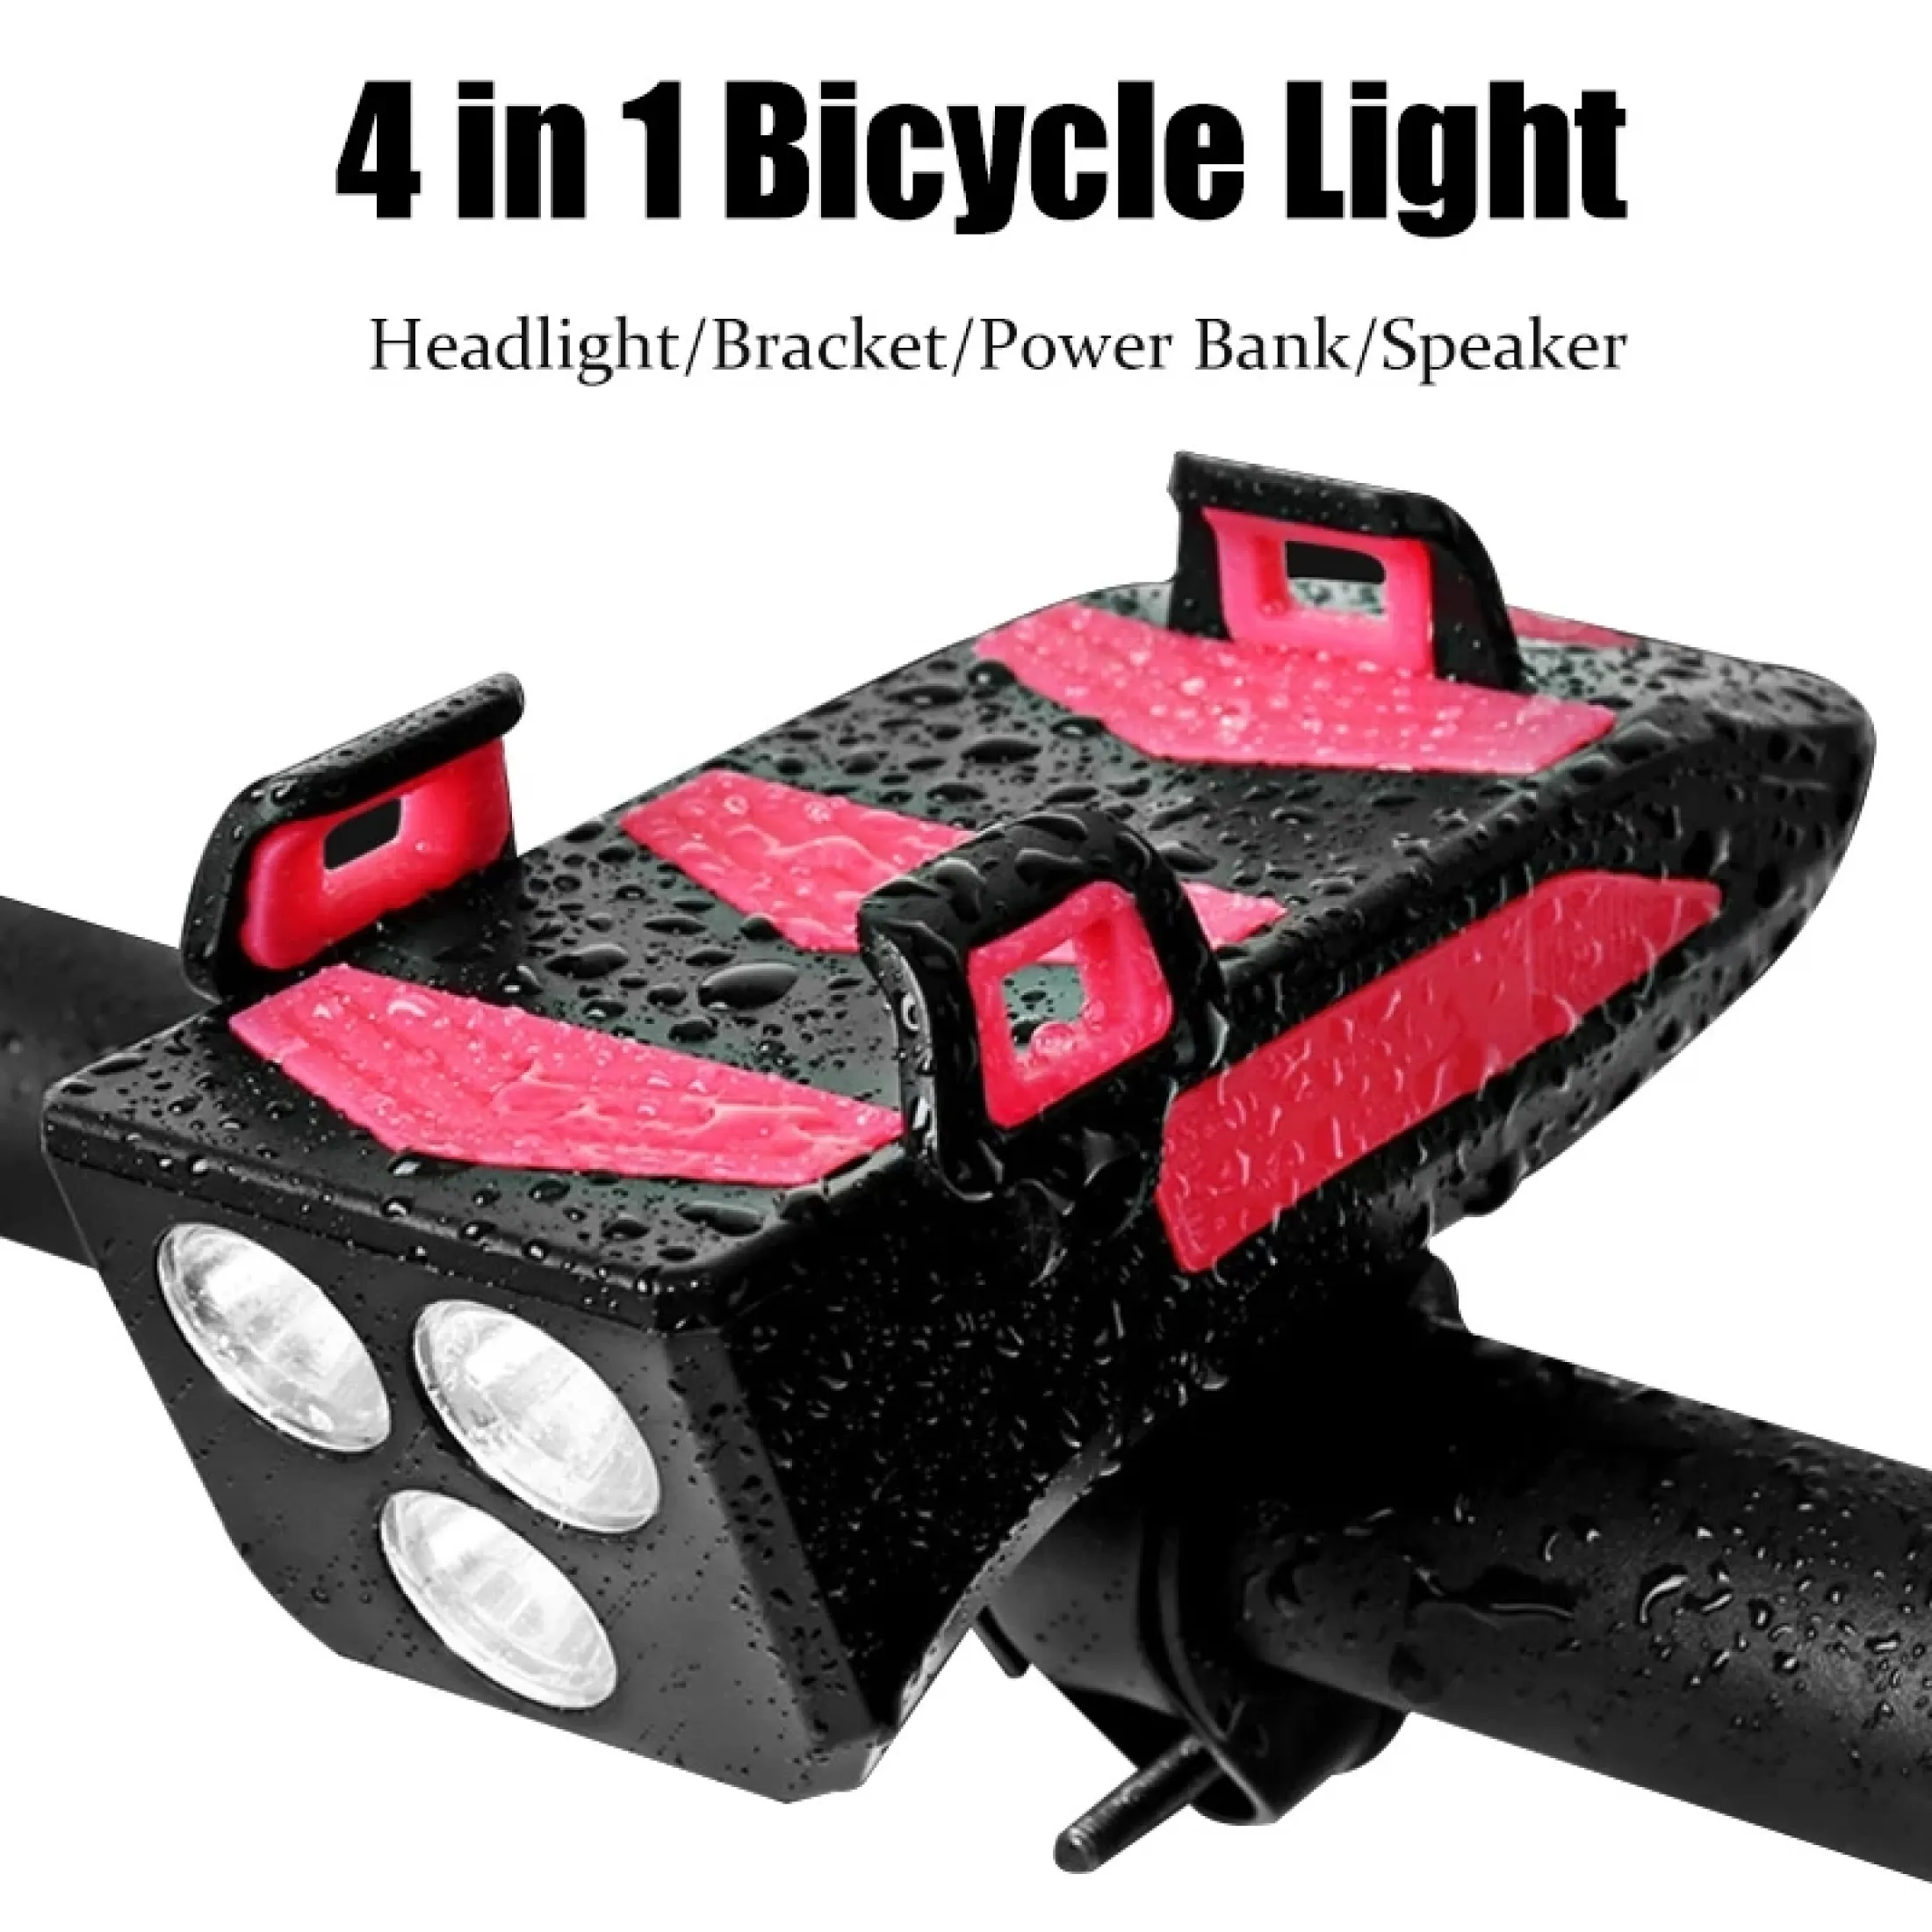 bike light with power bank